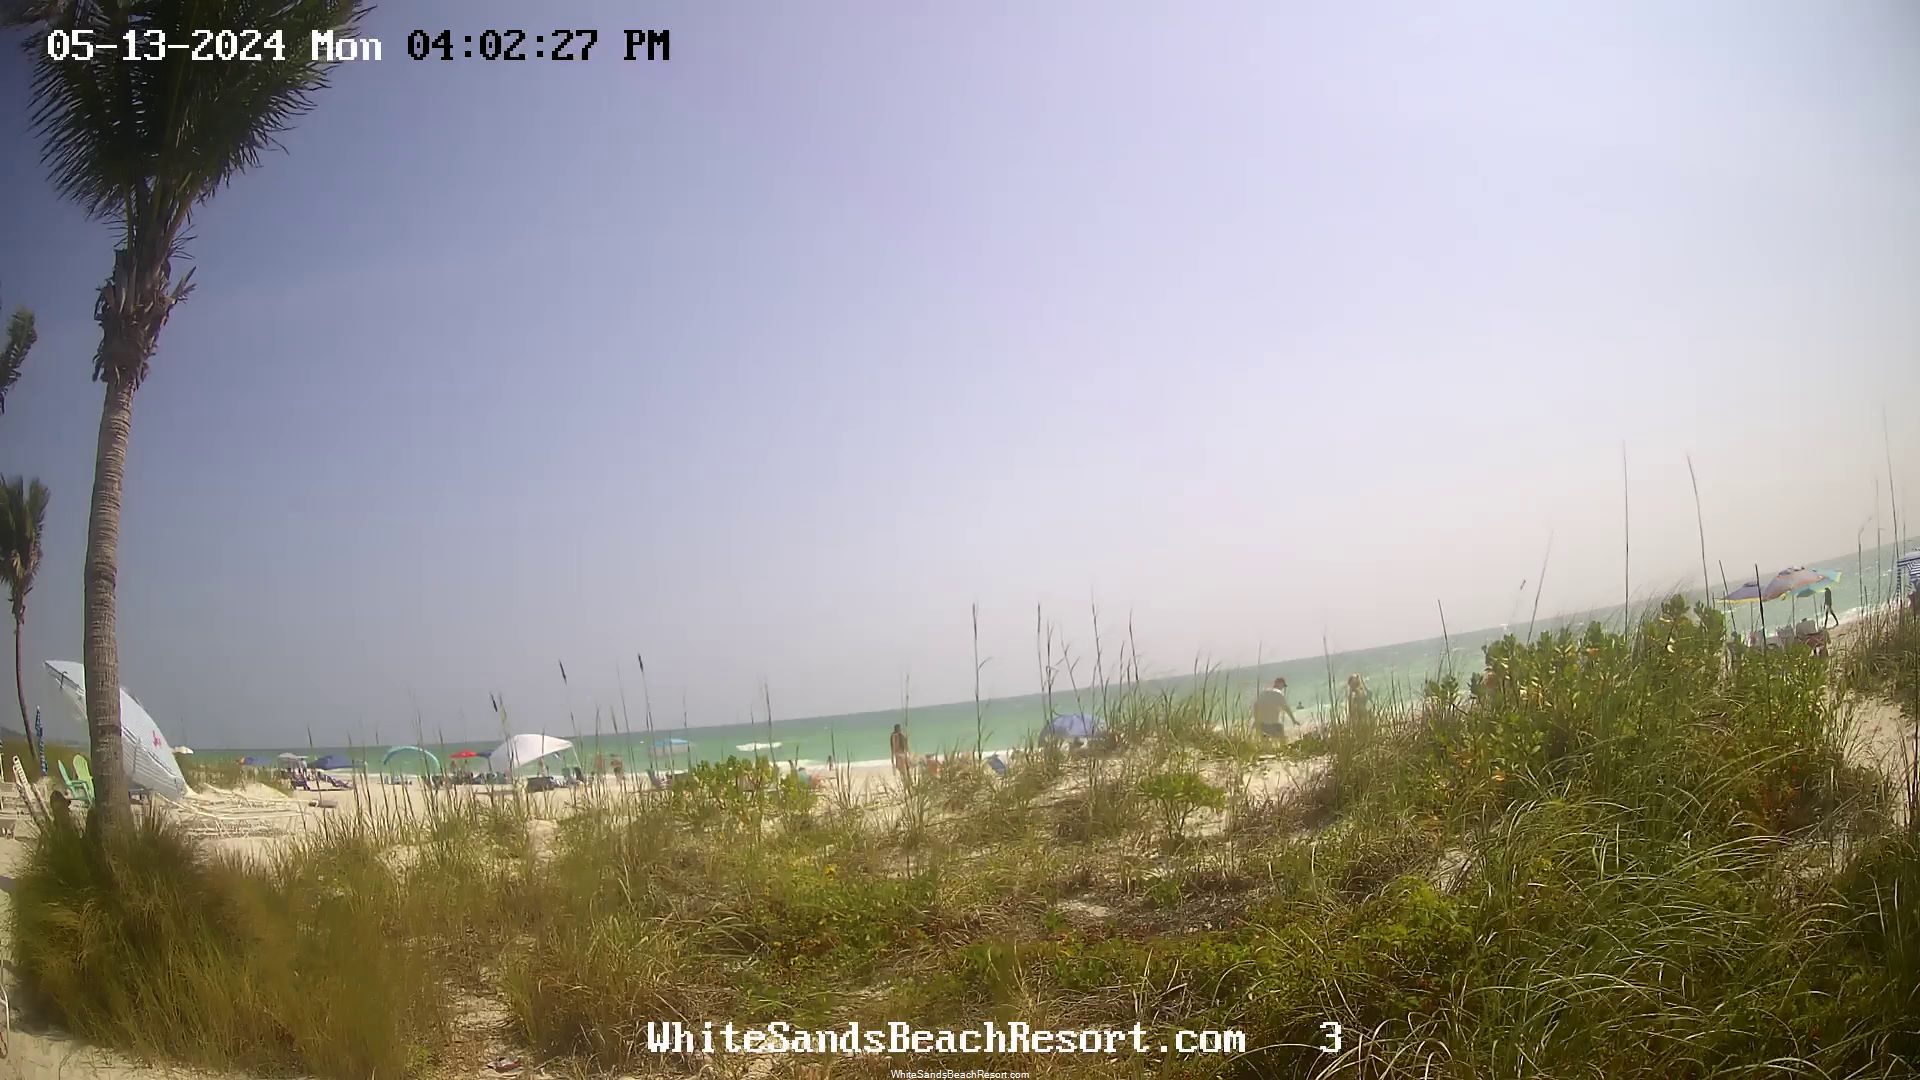 Holmes Beach, Florida Wed. 15:56